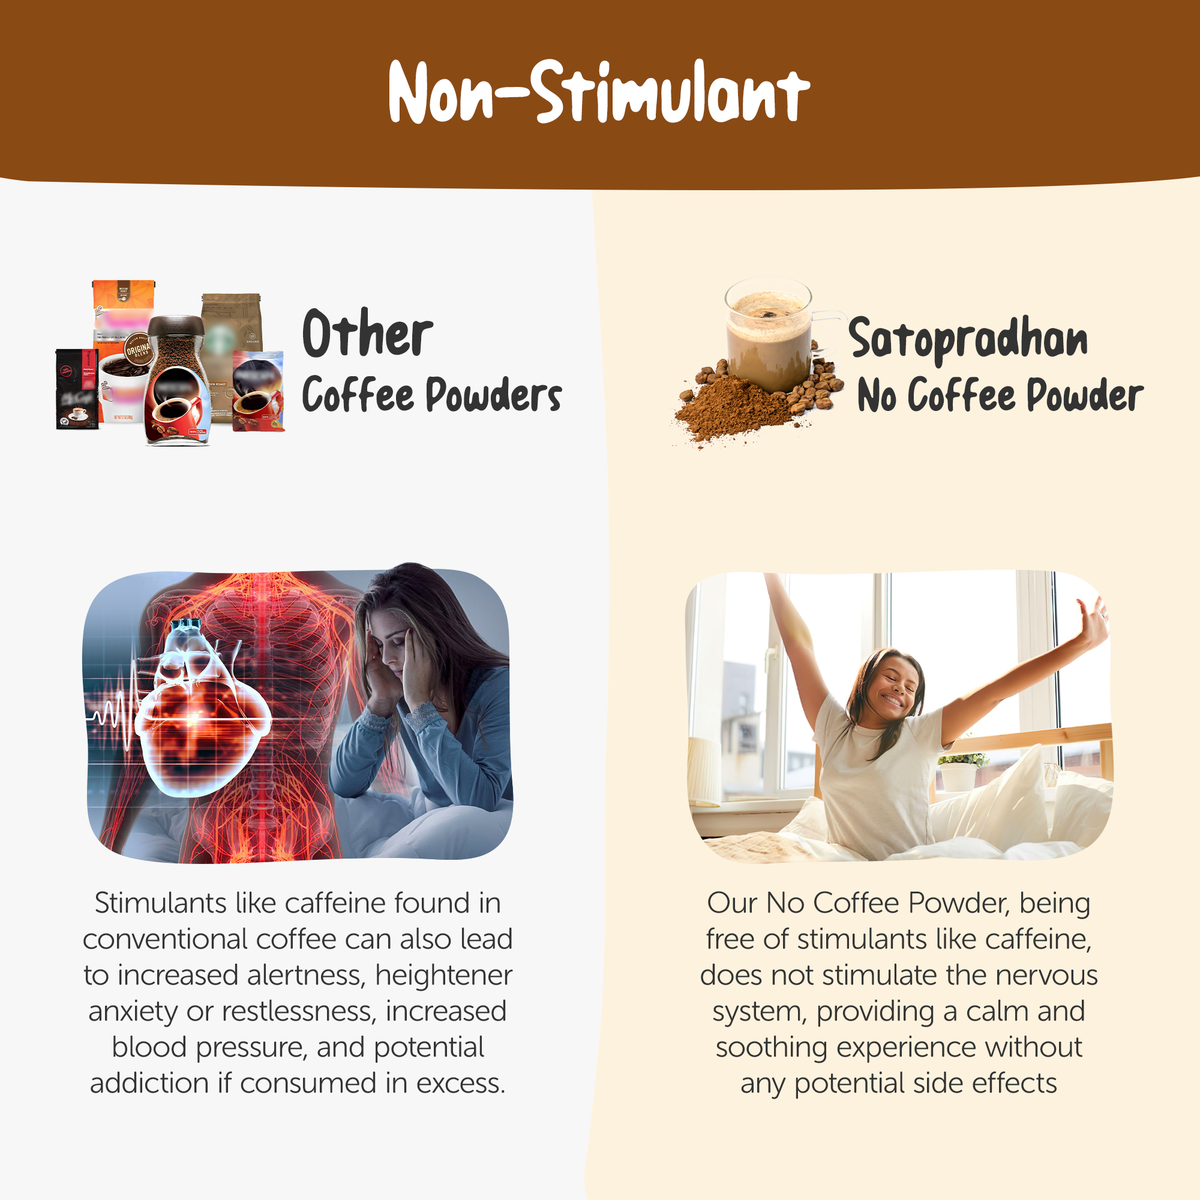 satopradhan no coffee powder is non stimulant where regular coffee caffeine stimulant which effects on brain, bp etc.